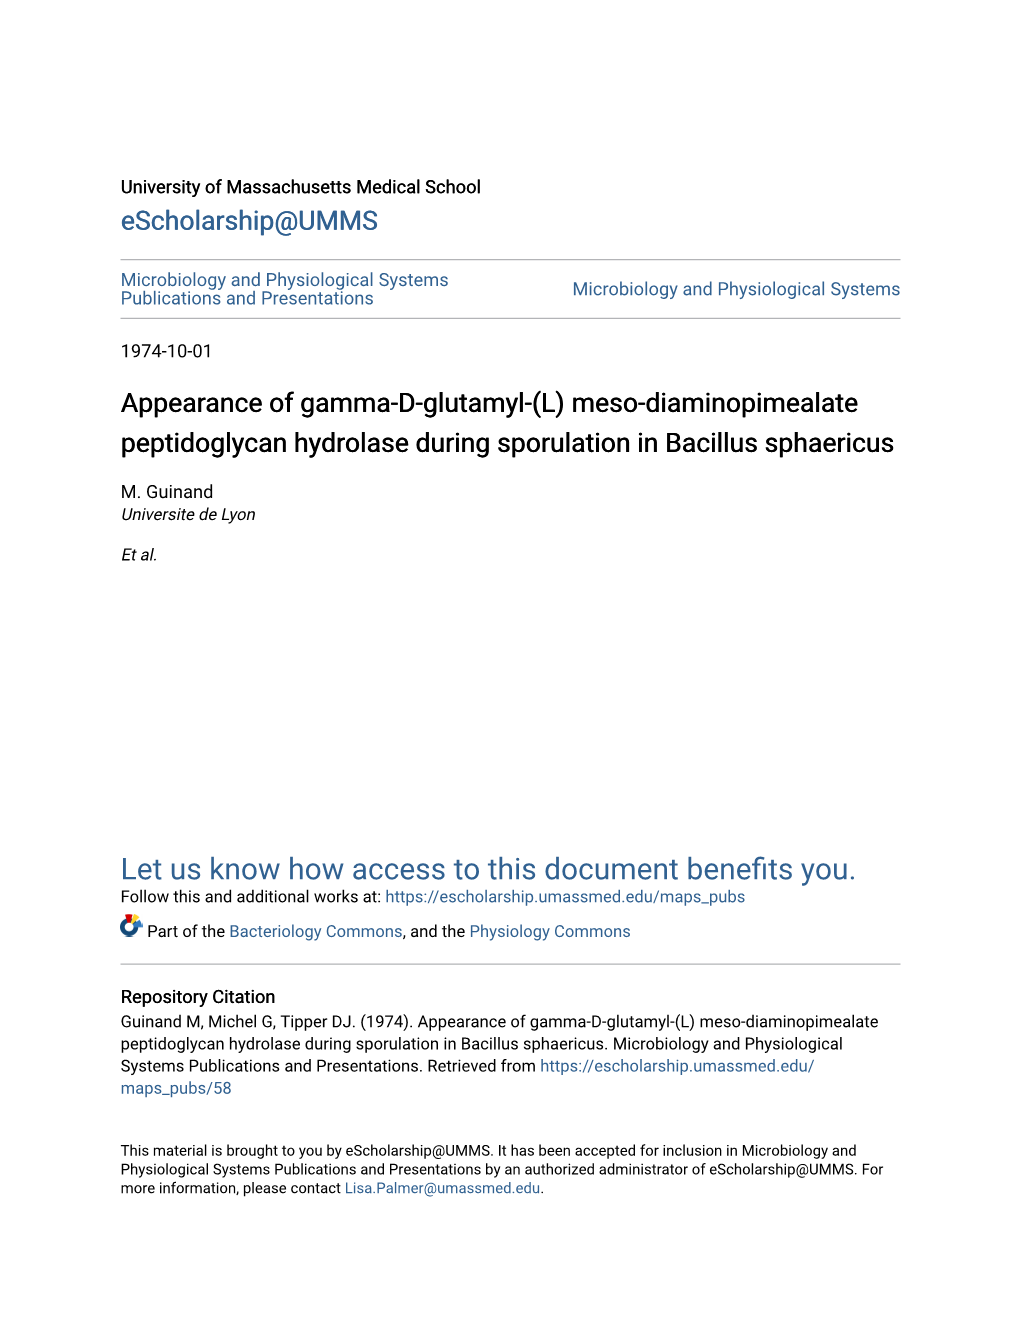 Meso-Diaminopimealate Peptidoglycan Hydrolase During Sporulation in Bacillus Sphaericus